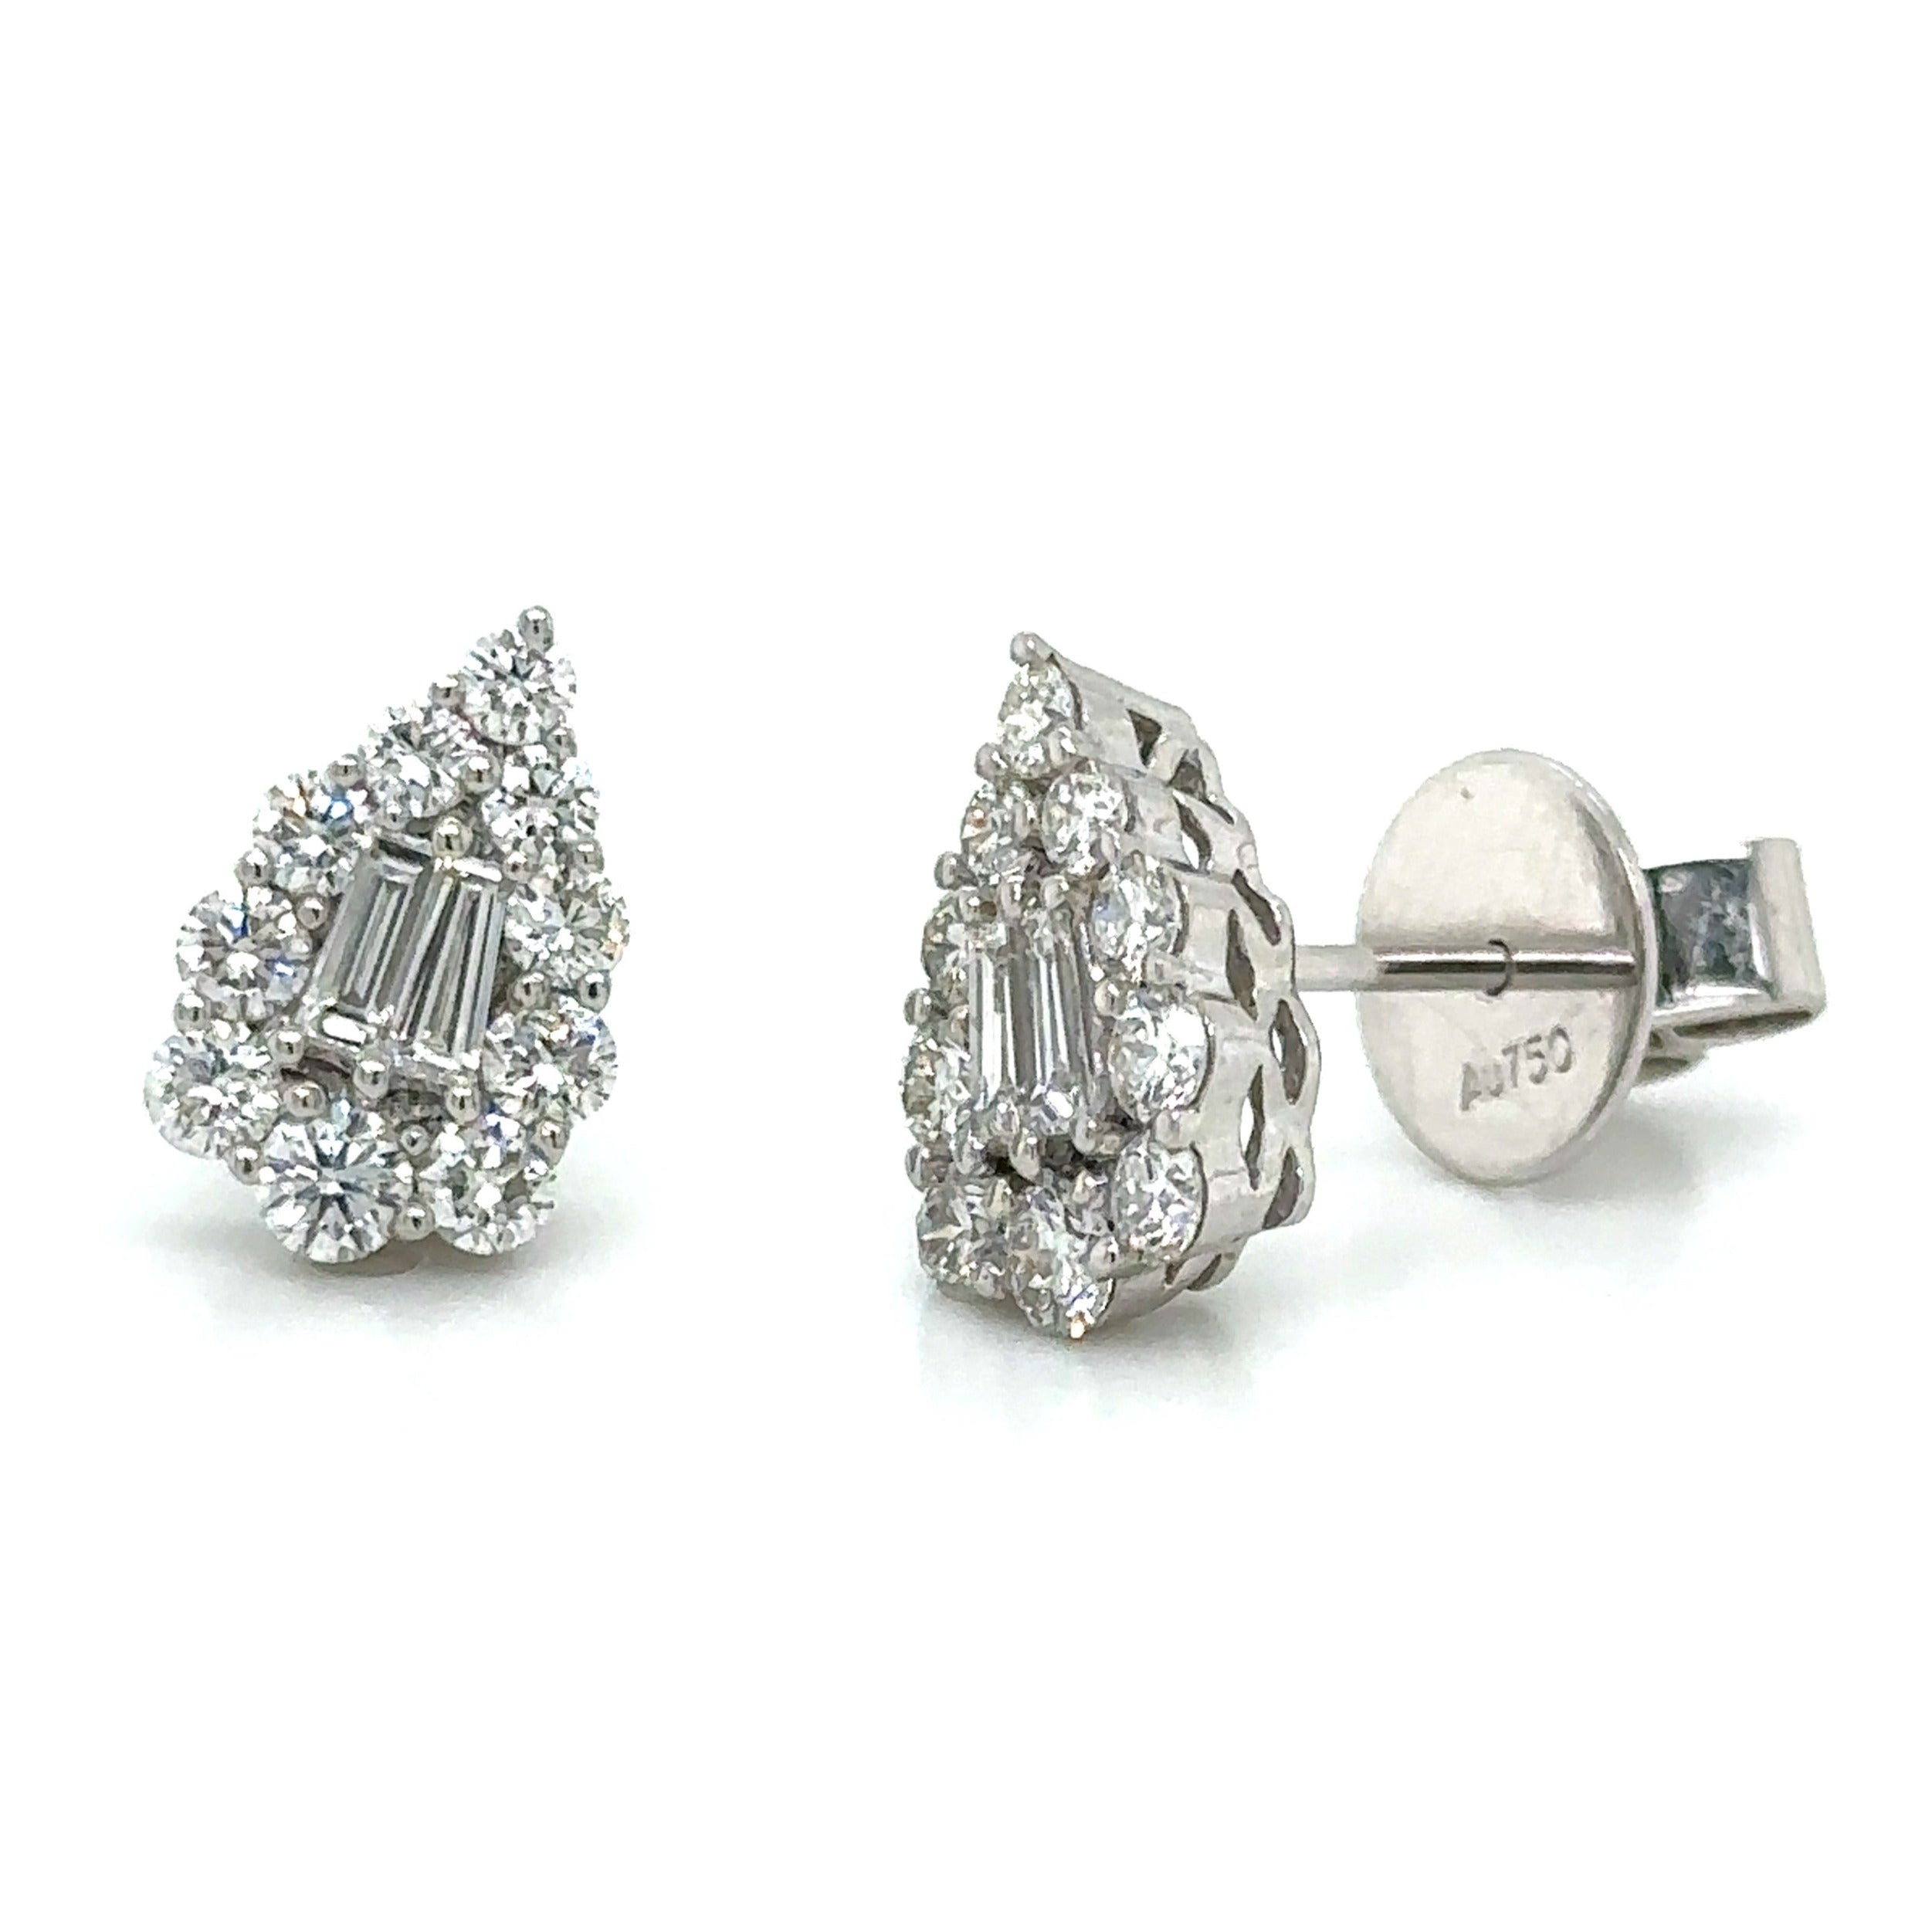 Diamond 1.34ct tw Fancy Pear Shape Center Stud Earrings with Halo